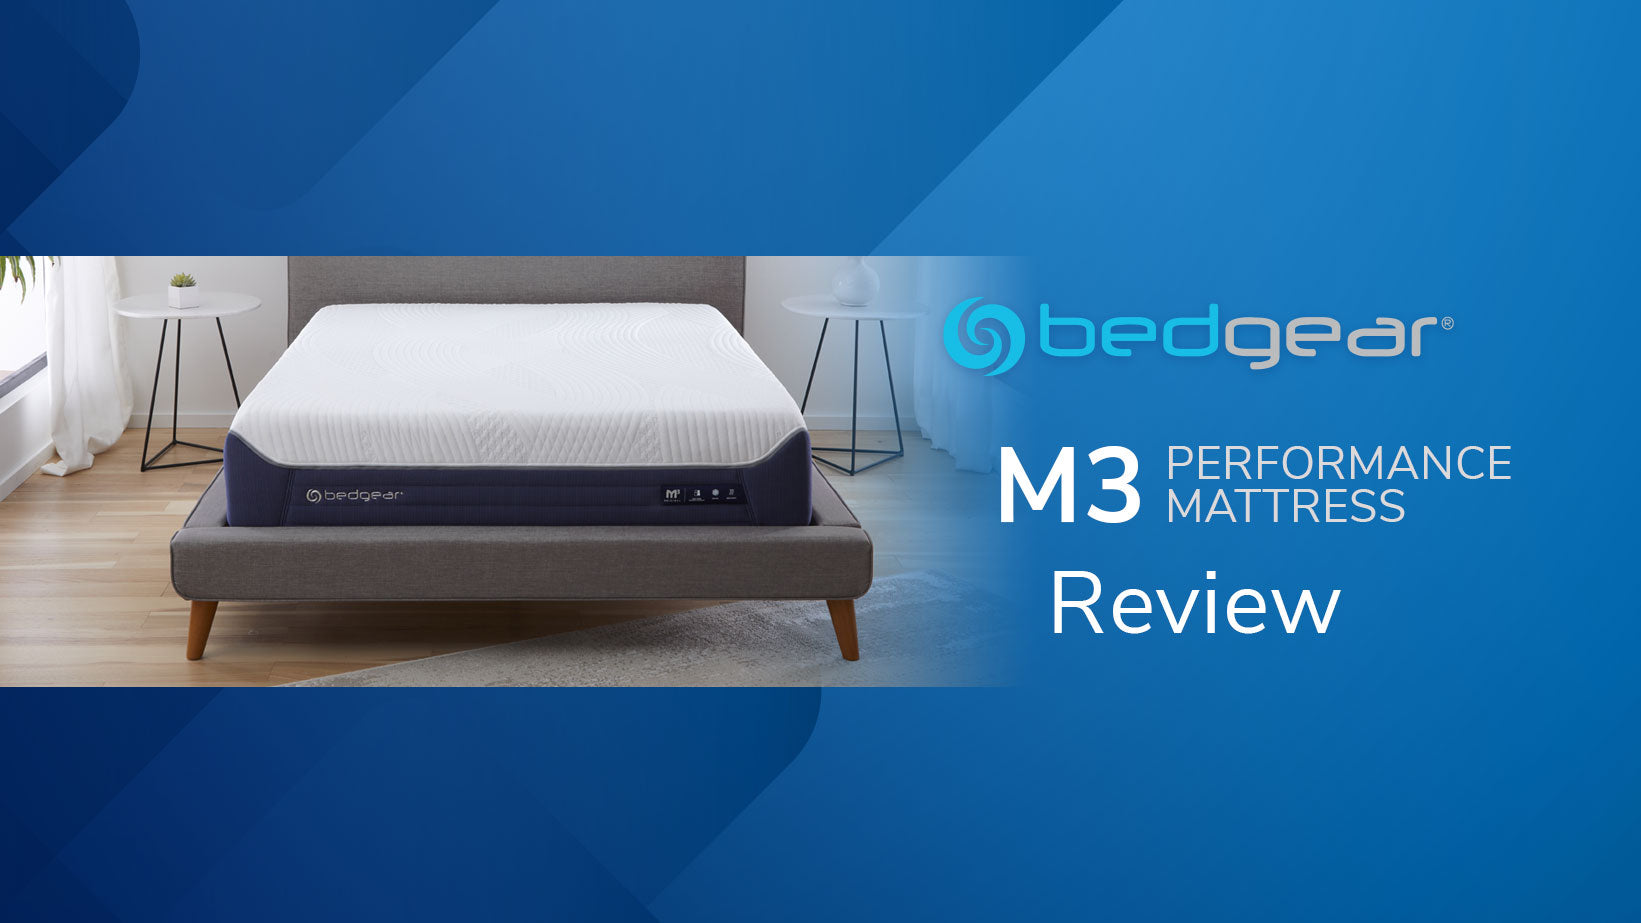 Bedgear M3 Performance Mattress Video Review: Optimal Comfort and Customization